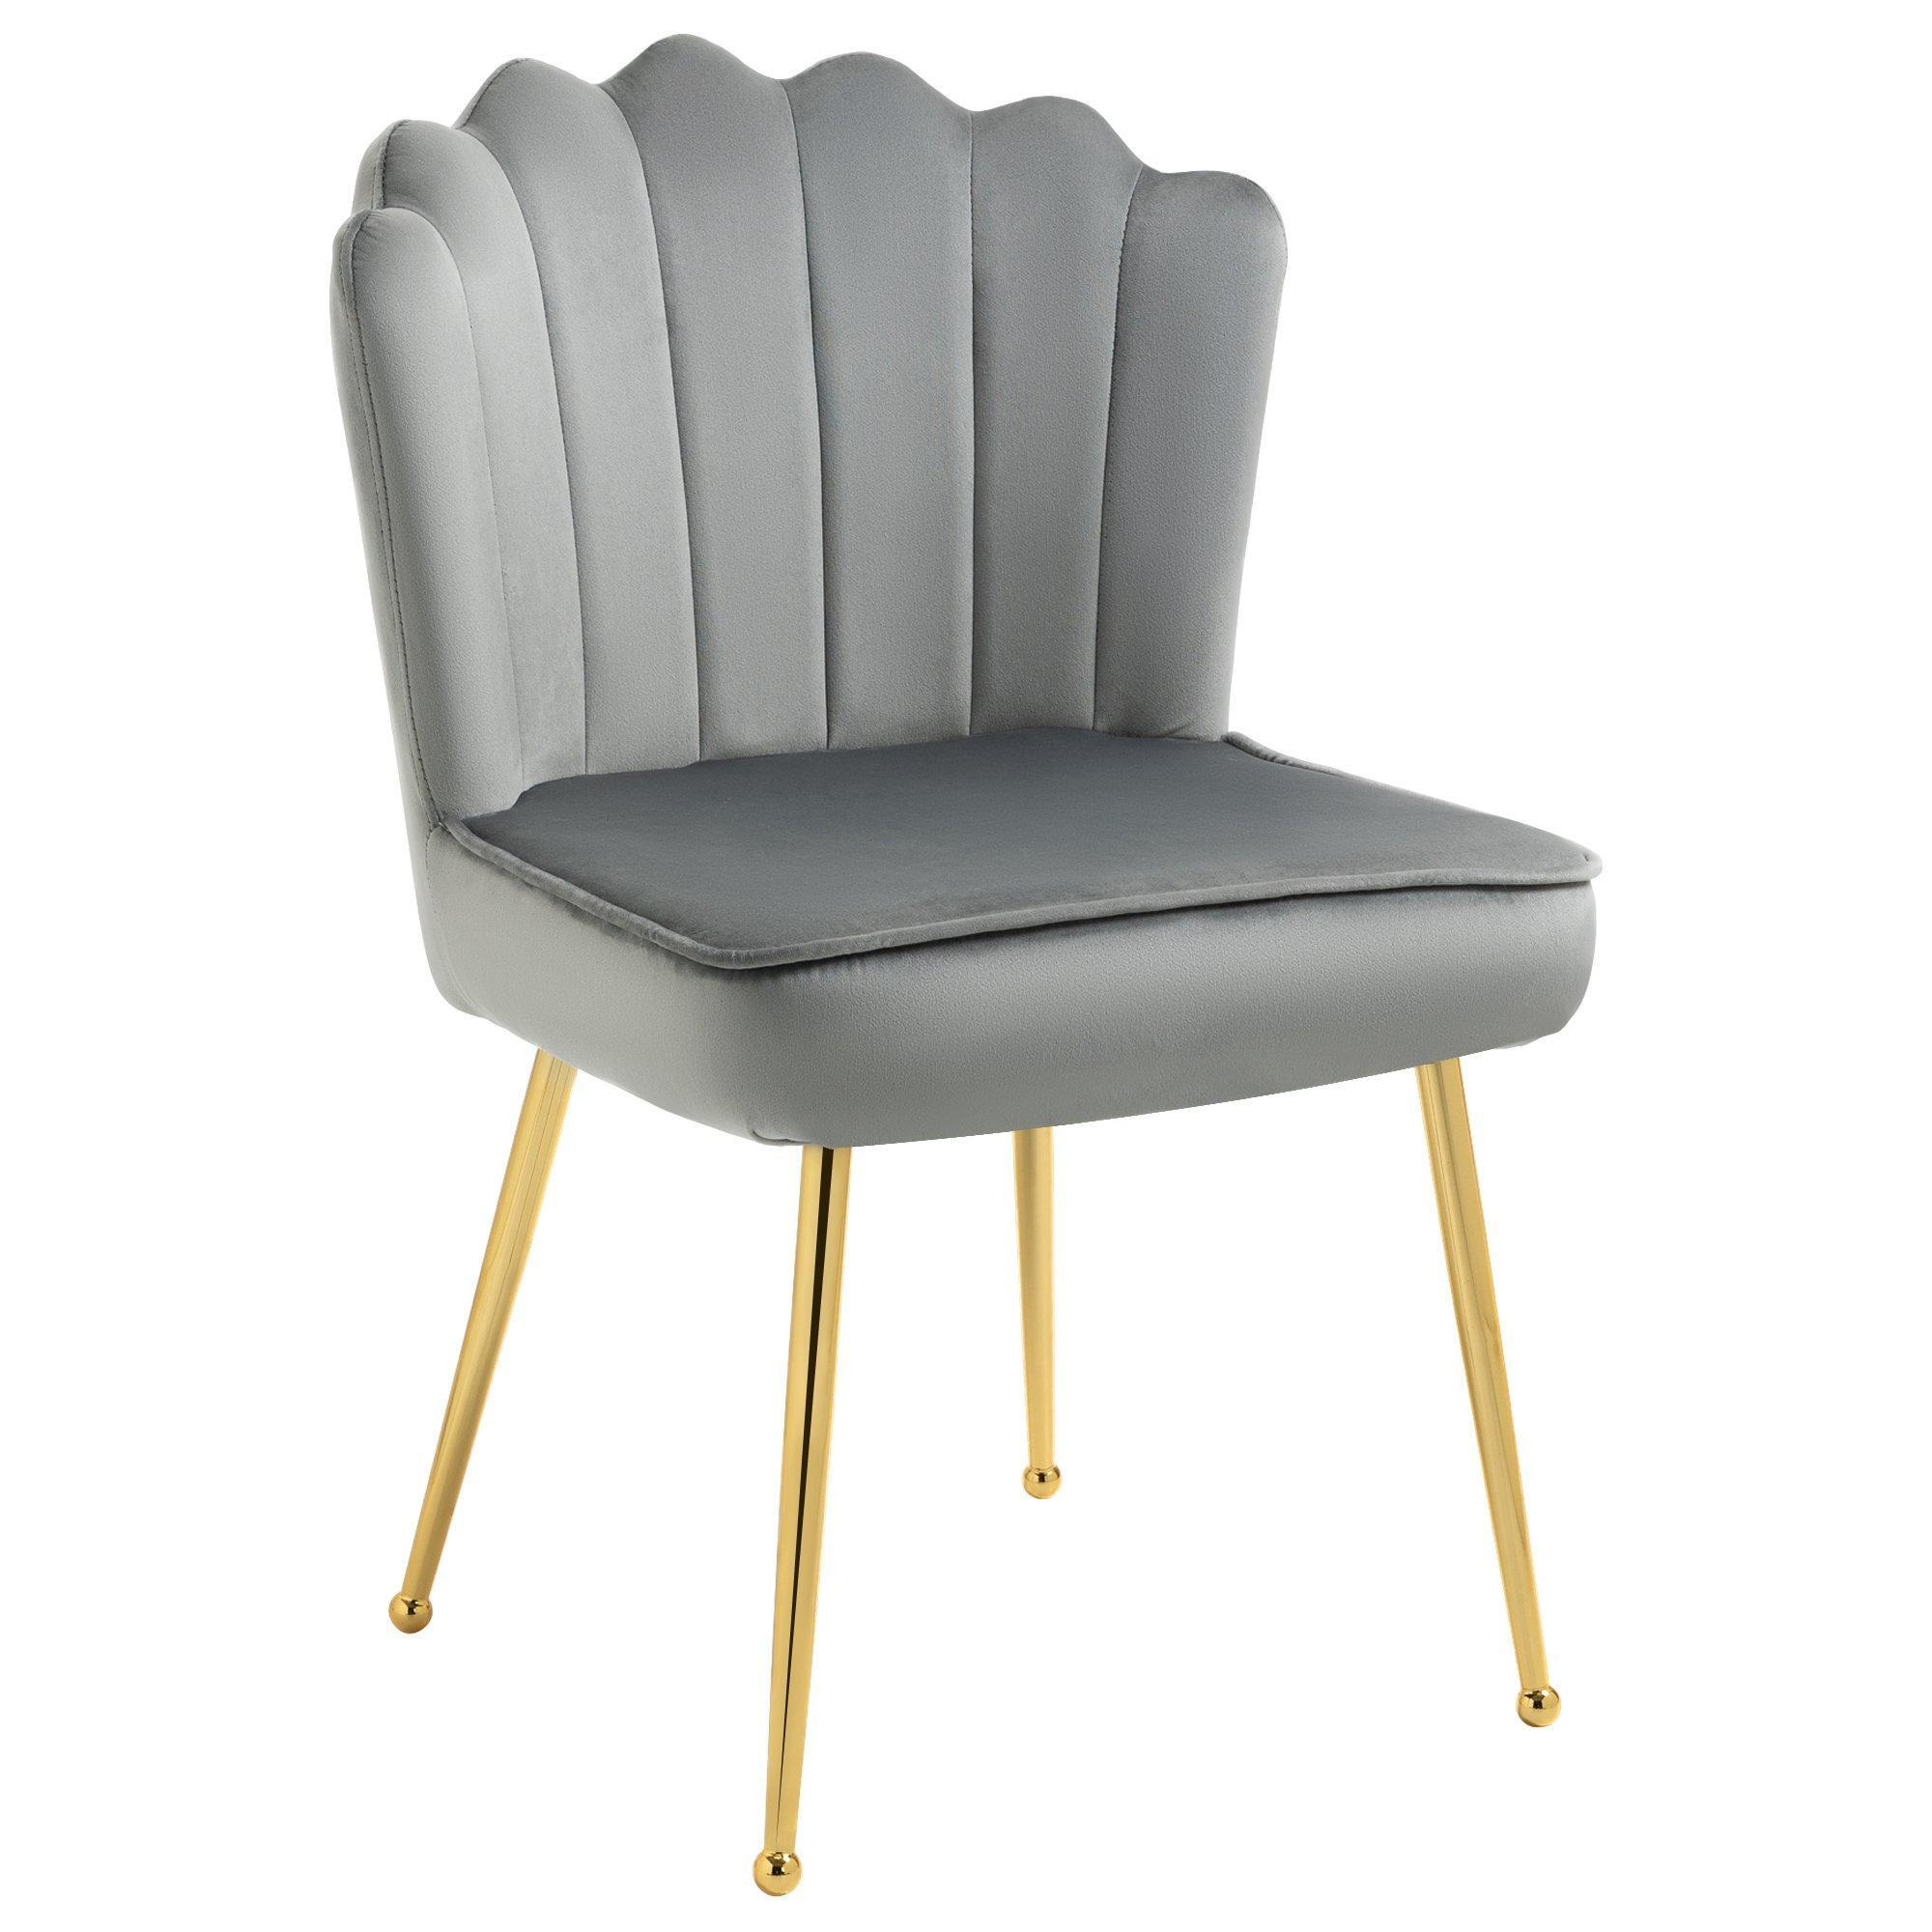 Velvet-Feel Shell Luxe Accent Chair Home Bedroom Lounge - image 1